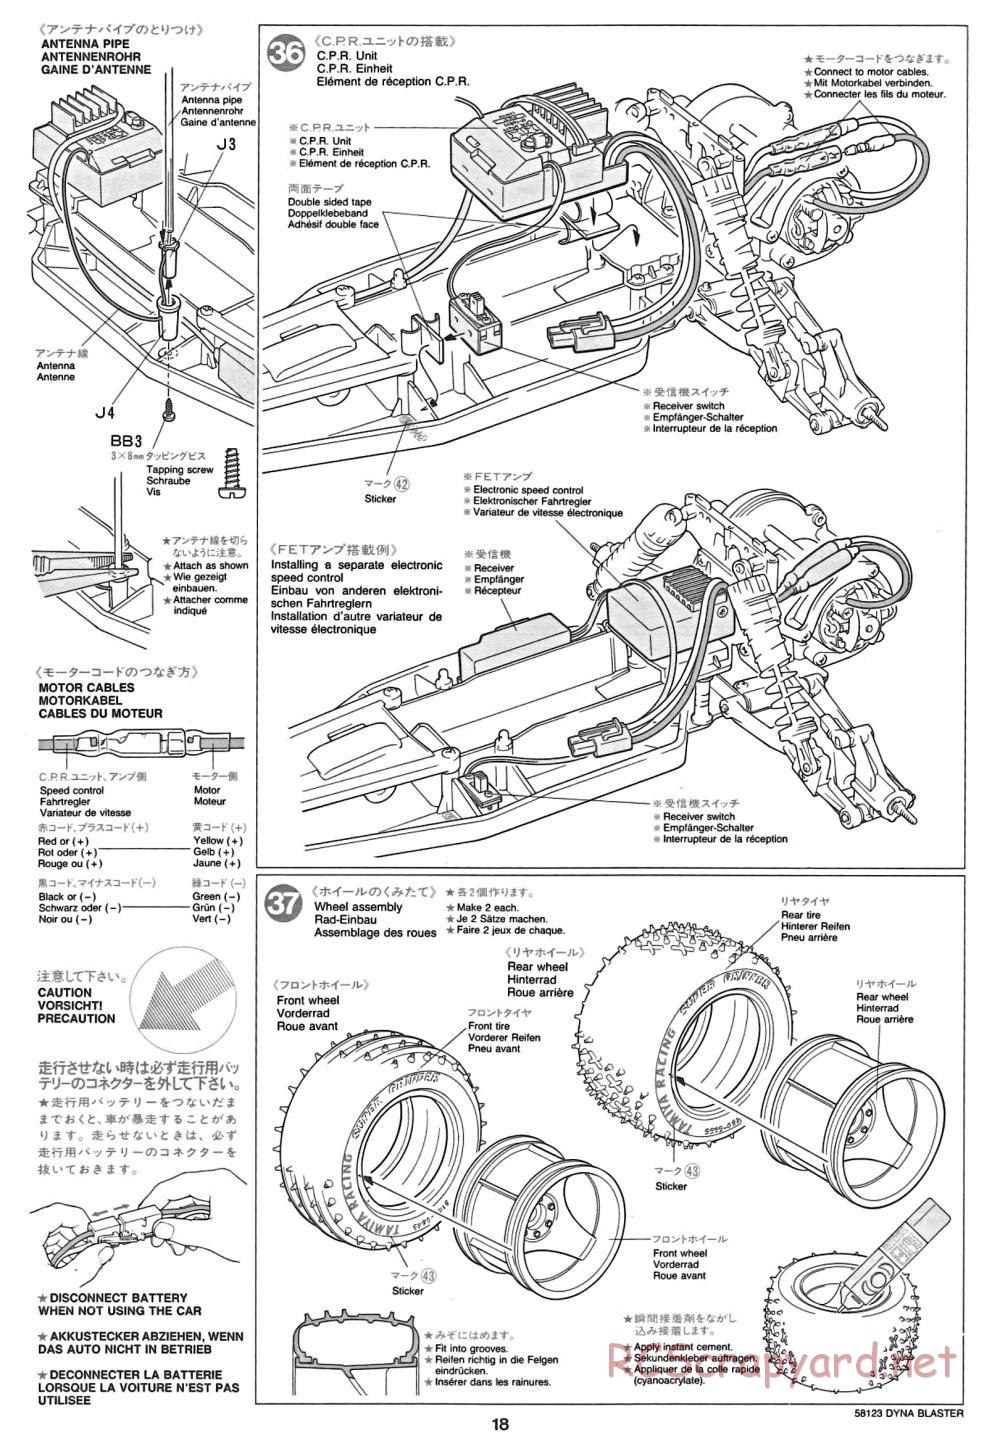 Tamiya - Dyna Blaster Chassis - Manual - Page 18